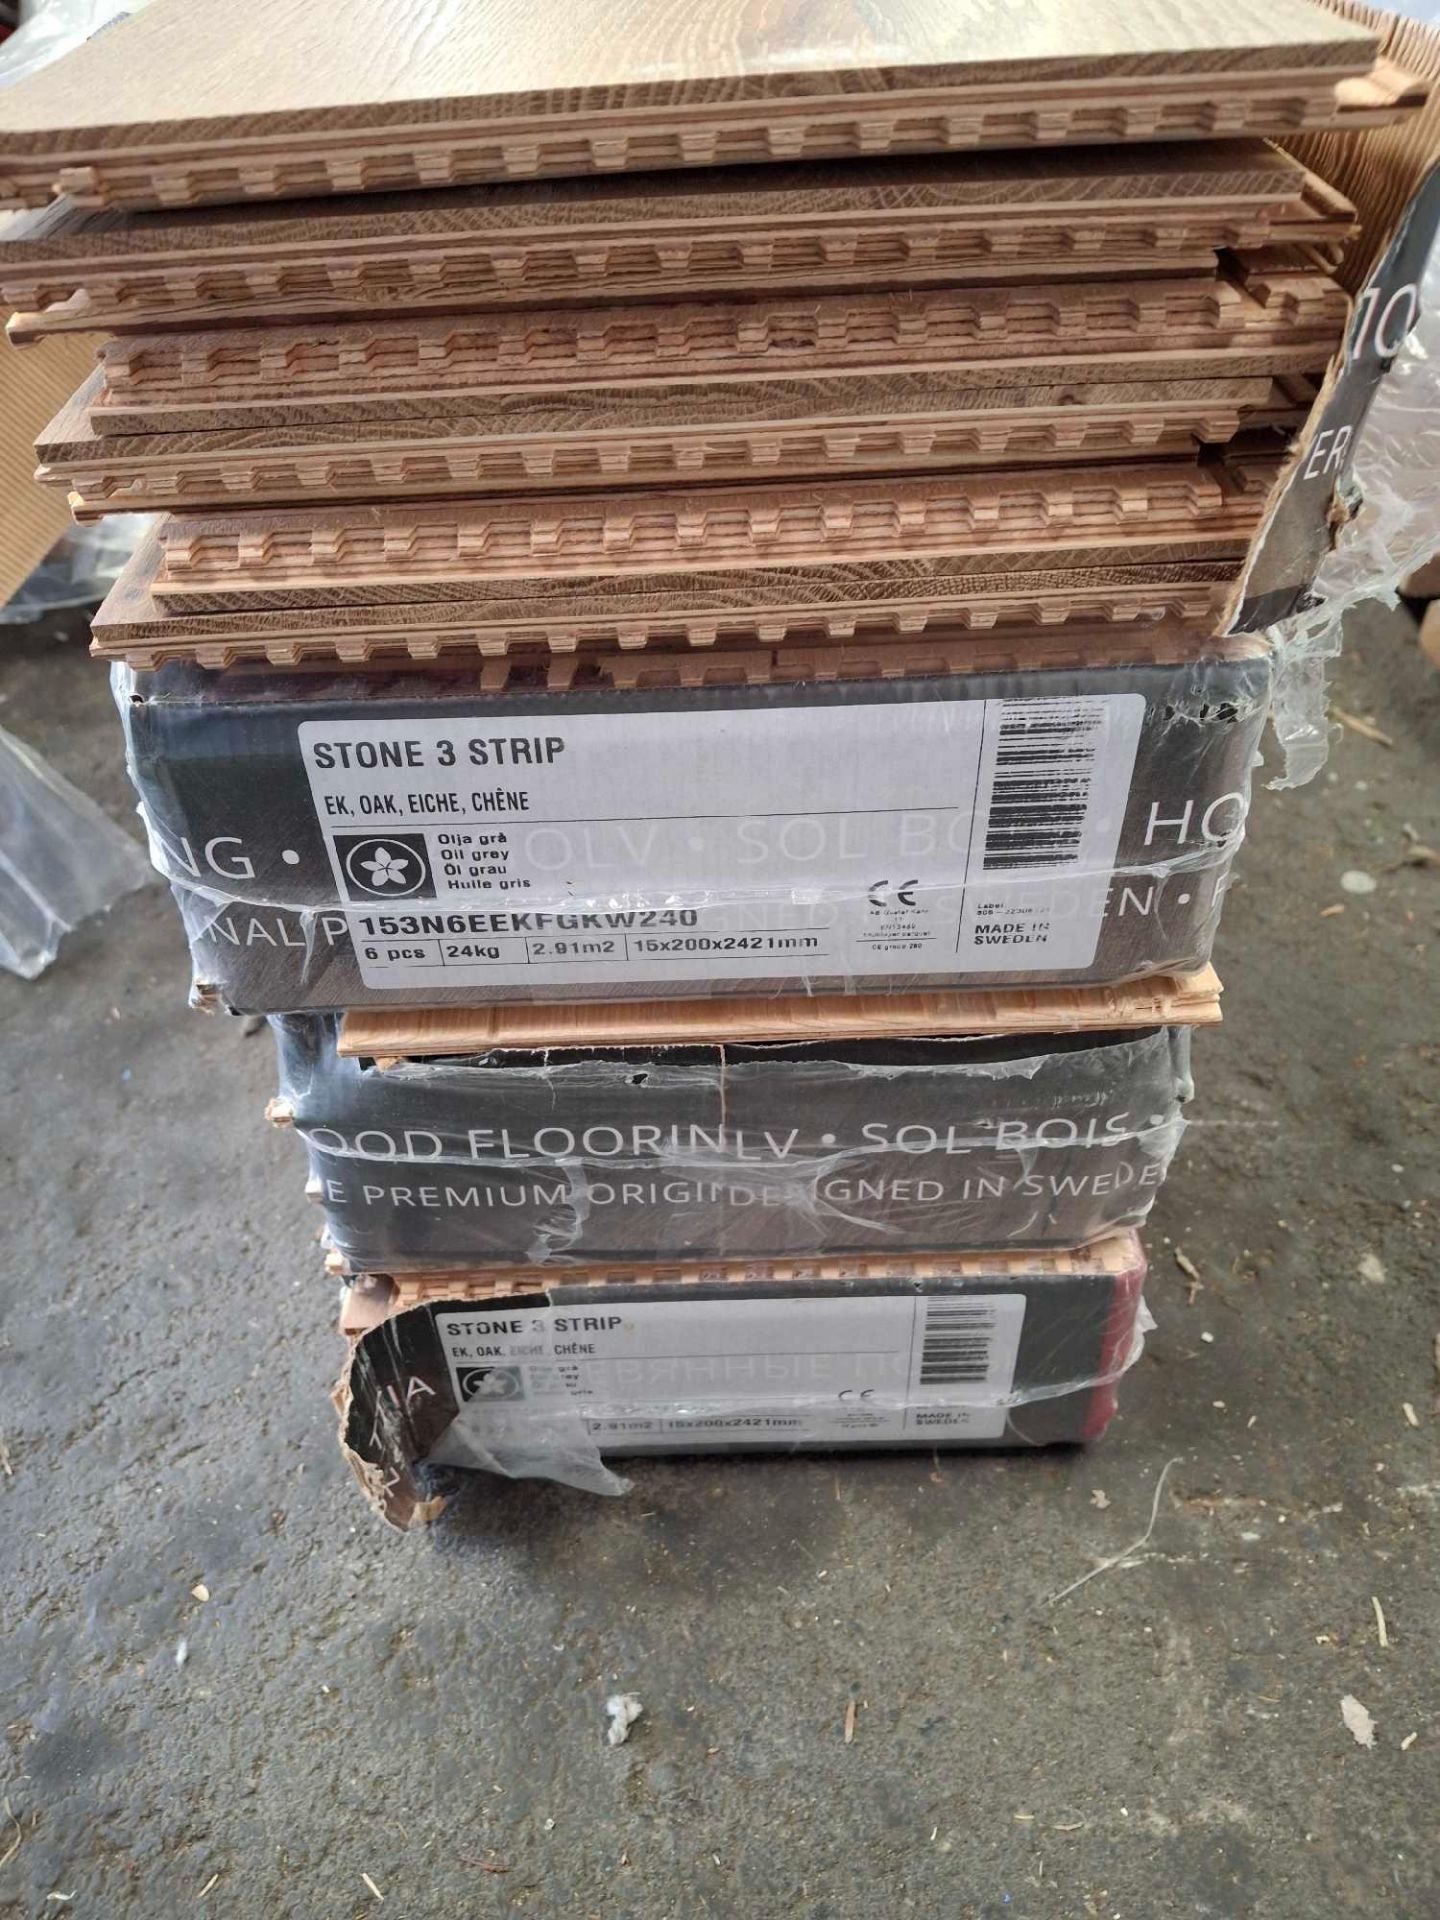 4 Packs of KÃ¤hrs Wood Flooring Stone 3 Strip Oiled Oak 2423mm x 200mm x 13mm Per Plank 6 Per Pack - Image 2 of 4